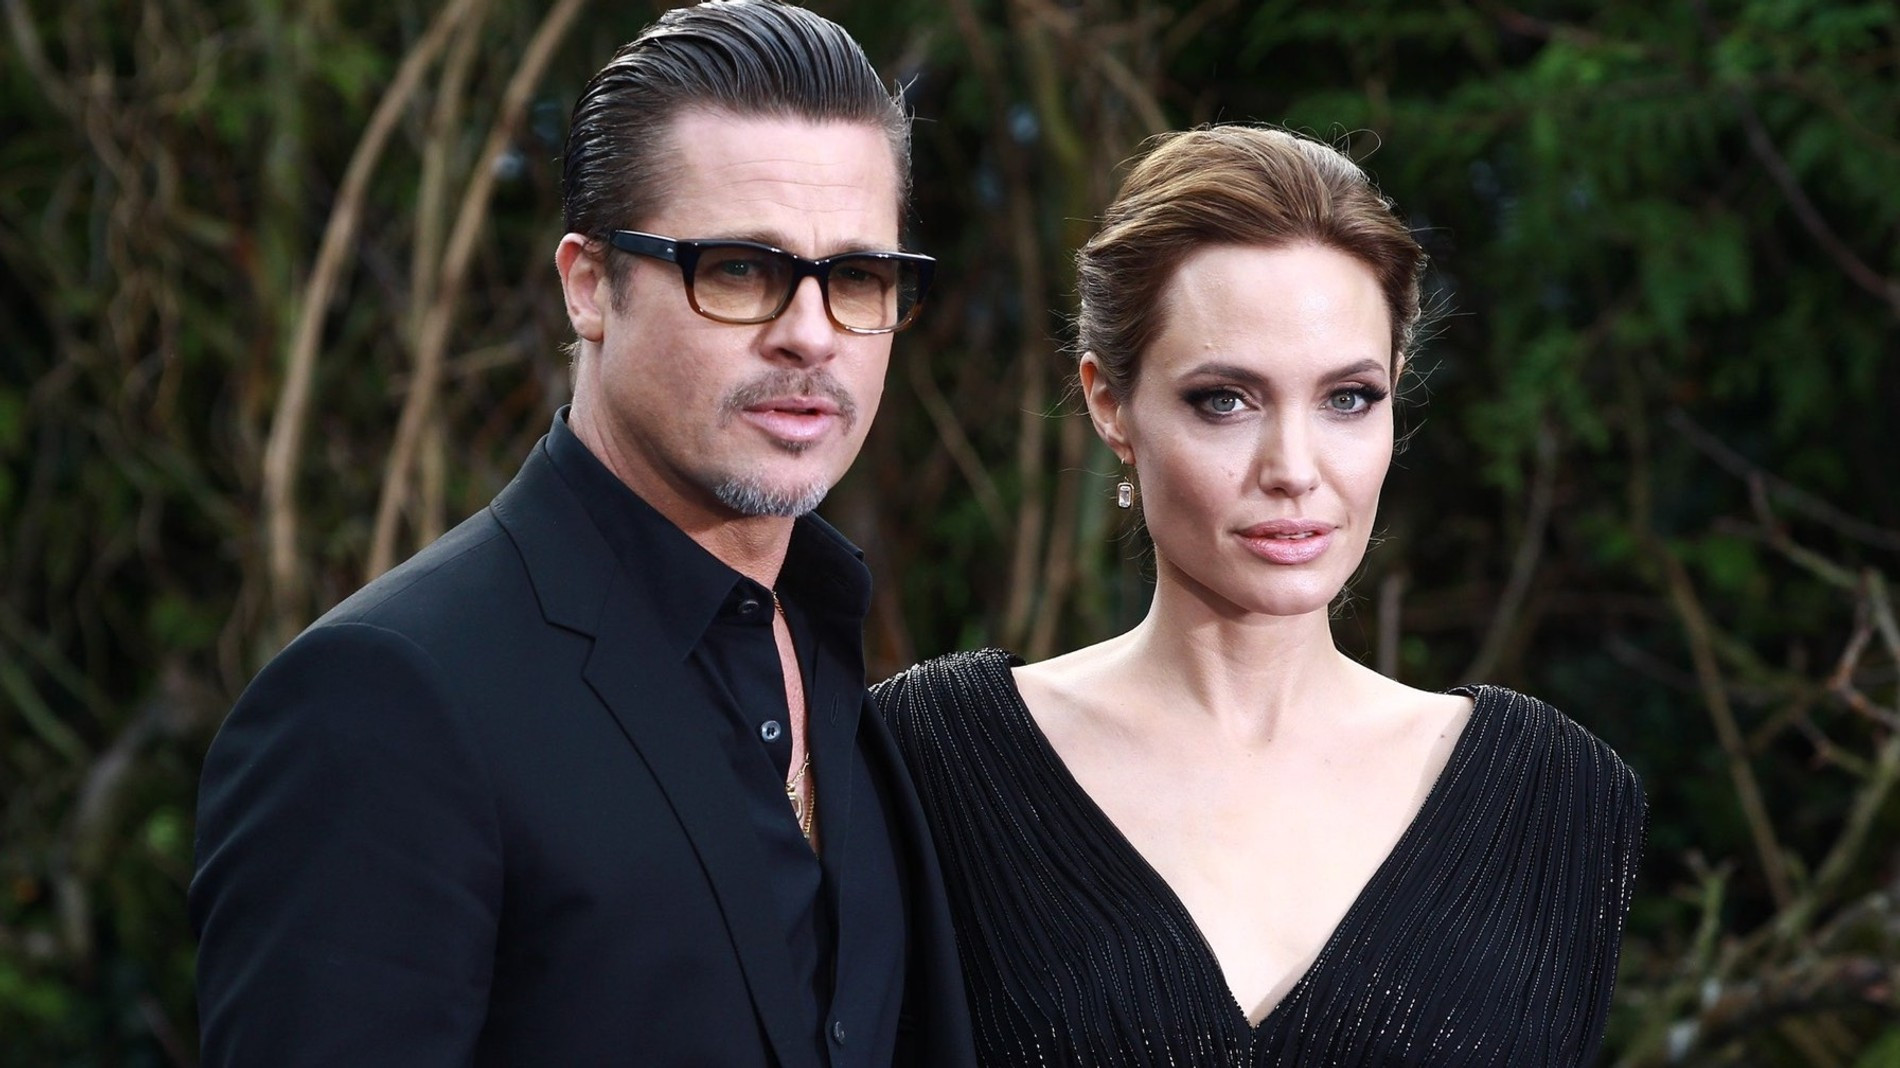 Брэд Питт и Анджелина Джоли
Фото: Getty images